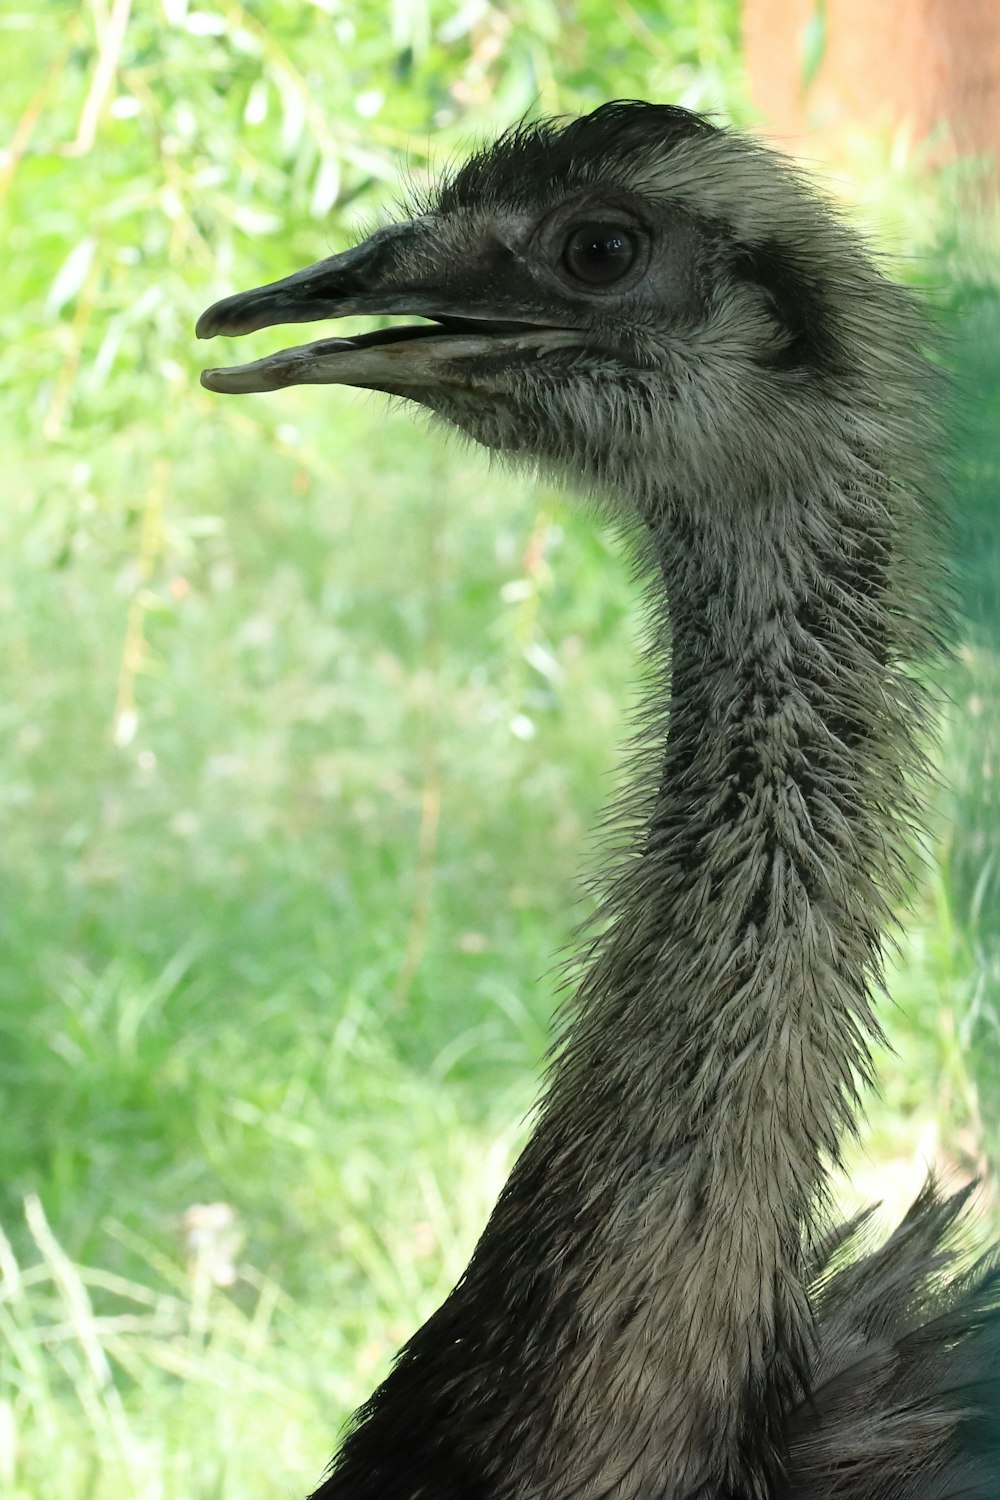 a close up of an ostrich in a field of grass